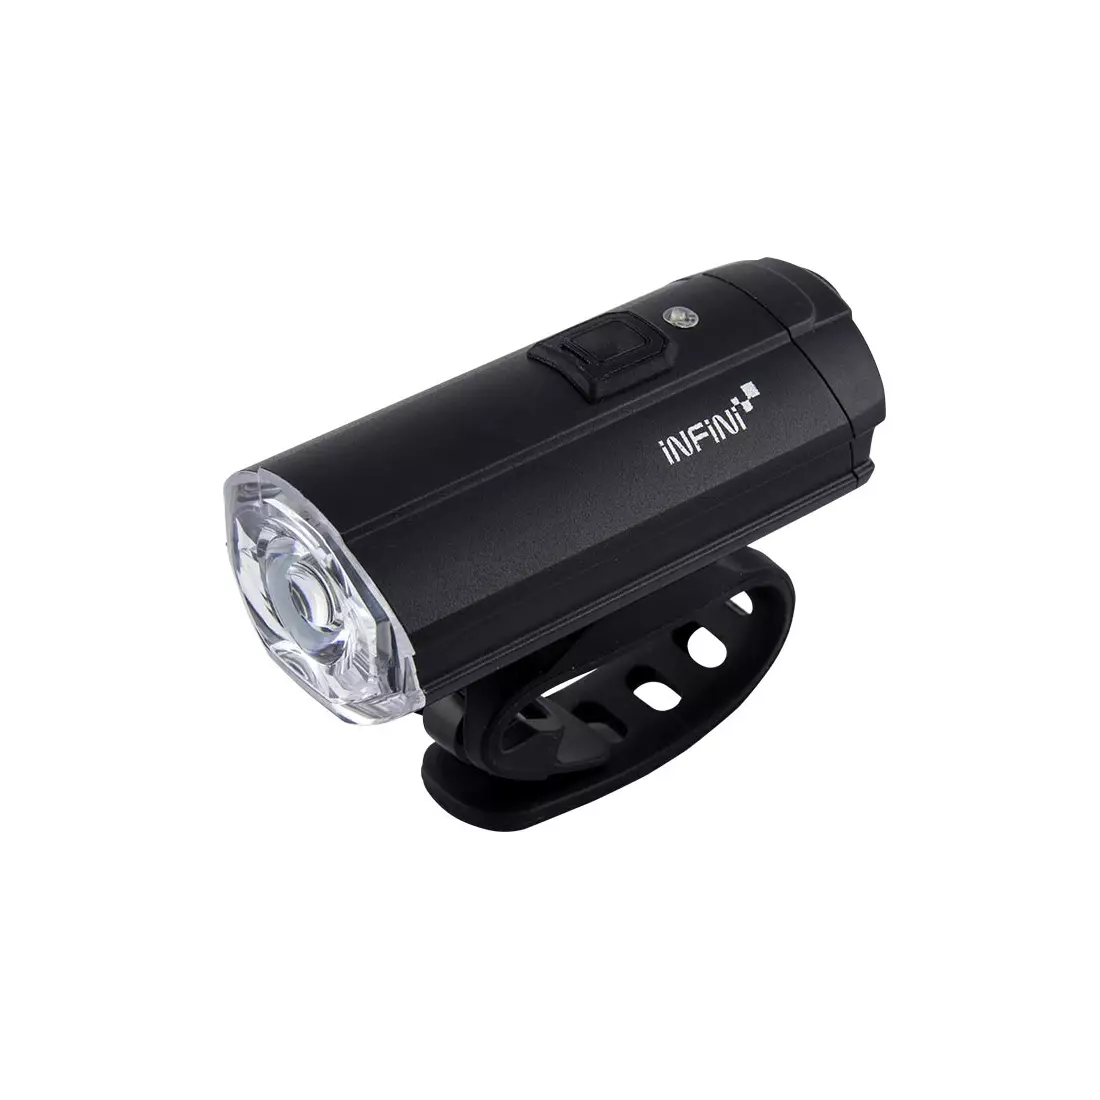 INFINI TRON 500 Black USB bicycle front light I-282P-B